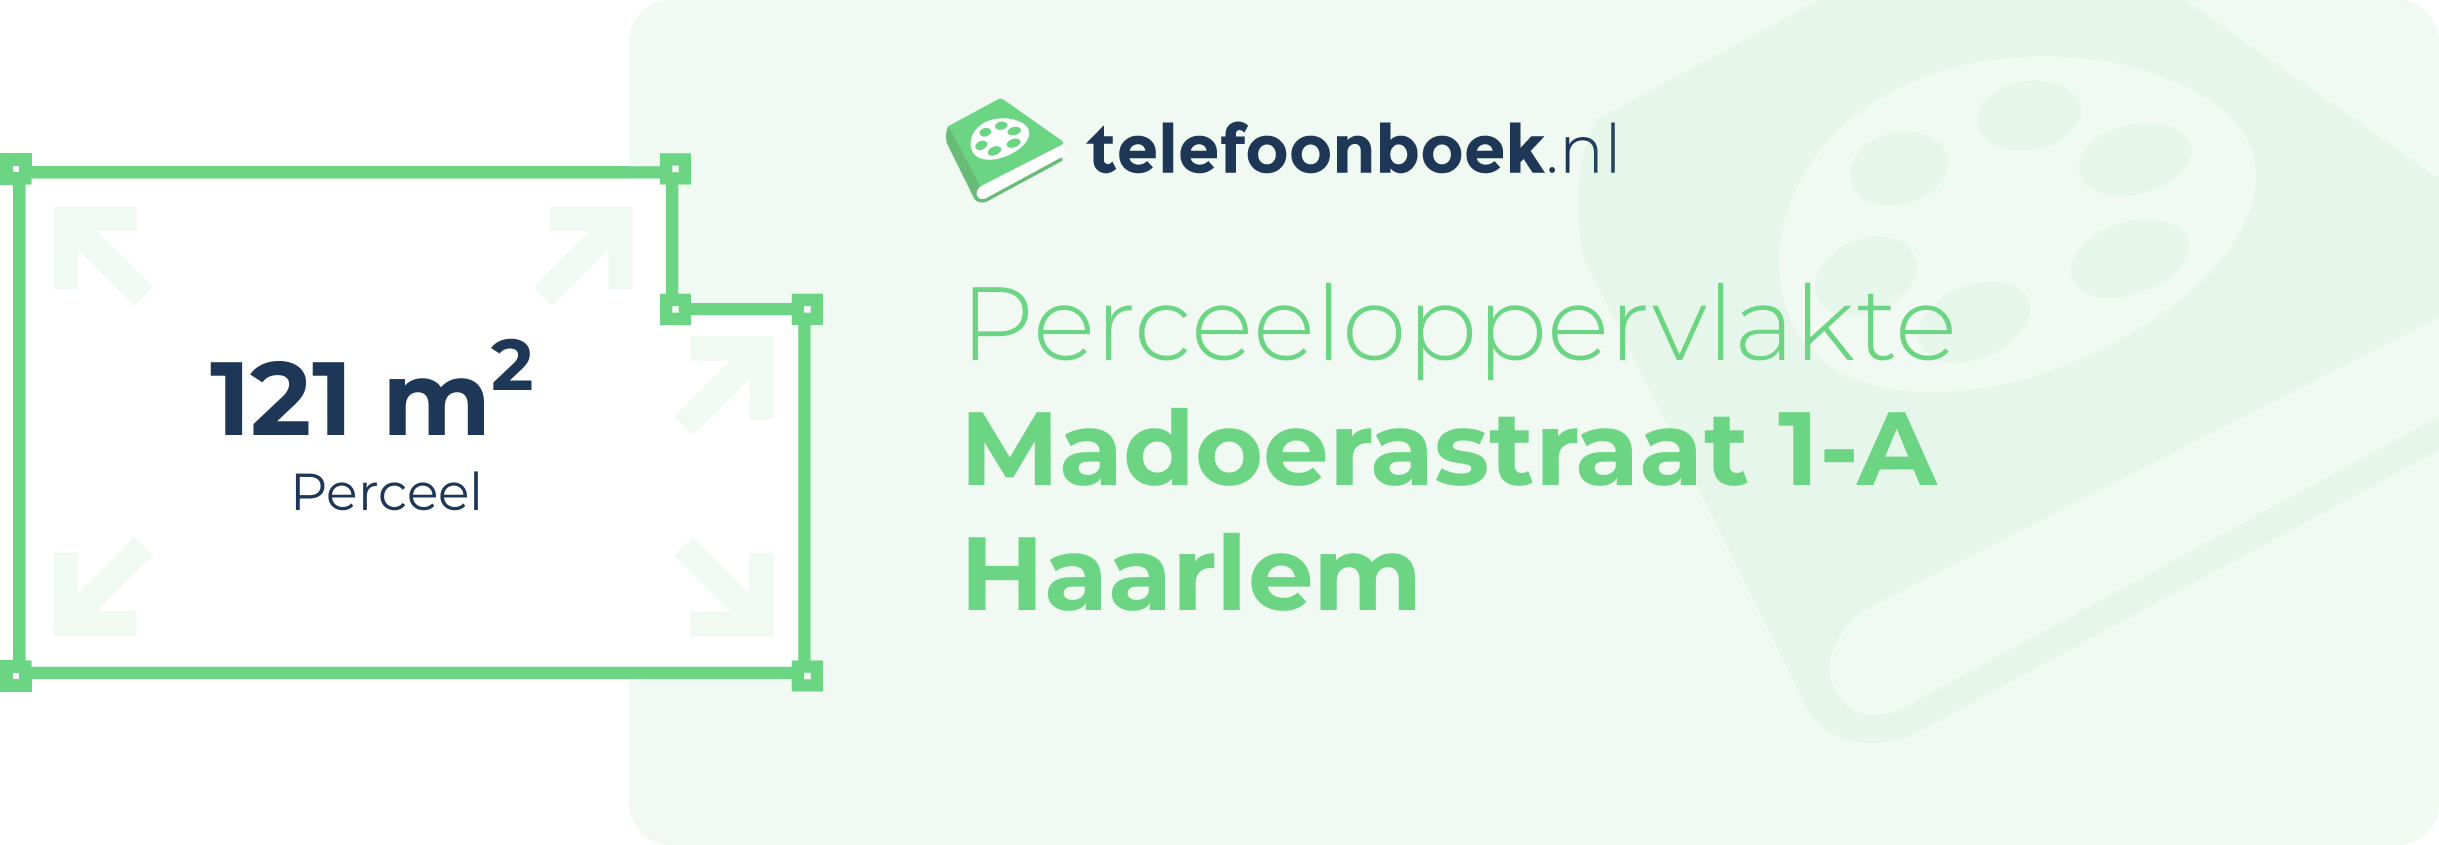 Perceeloppervlakte Madoerastraat 1-A Haarlem